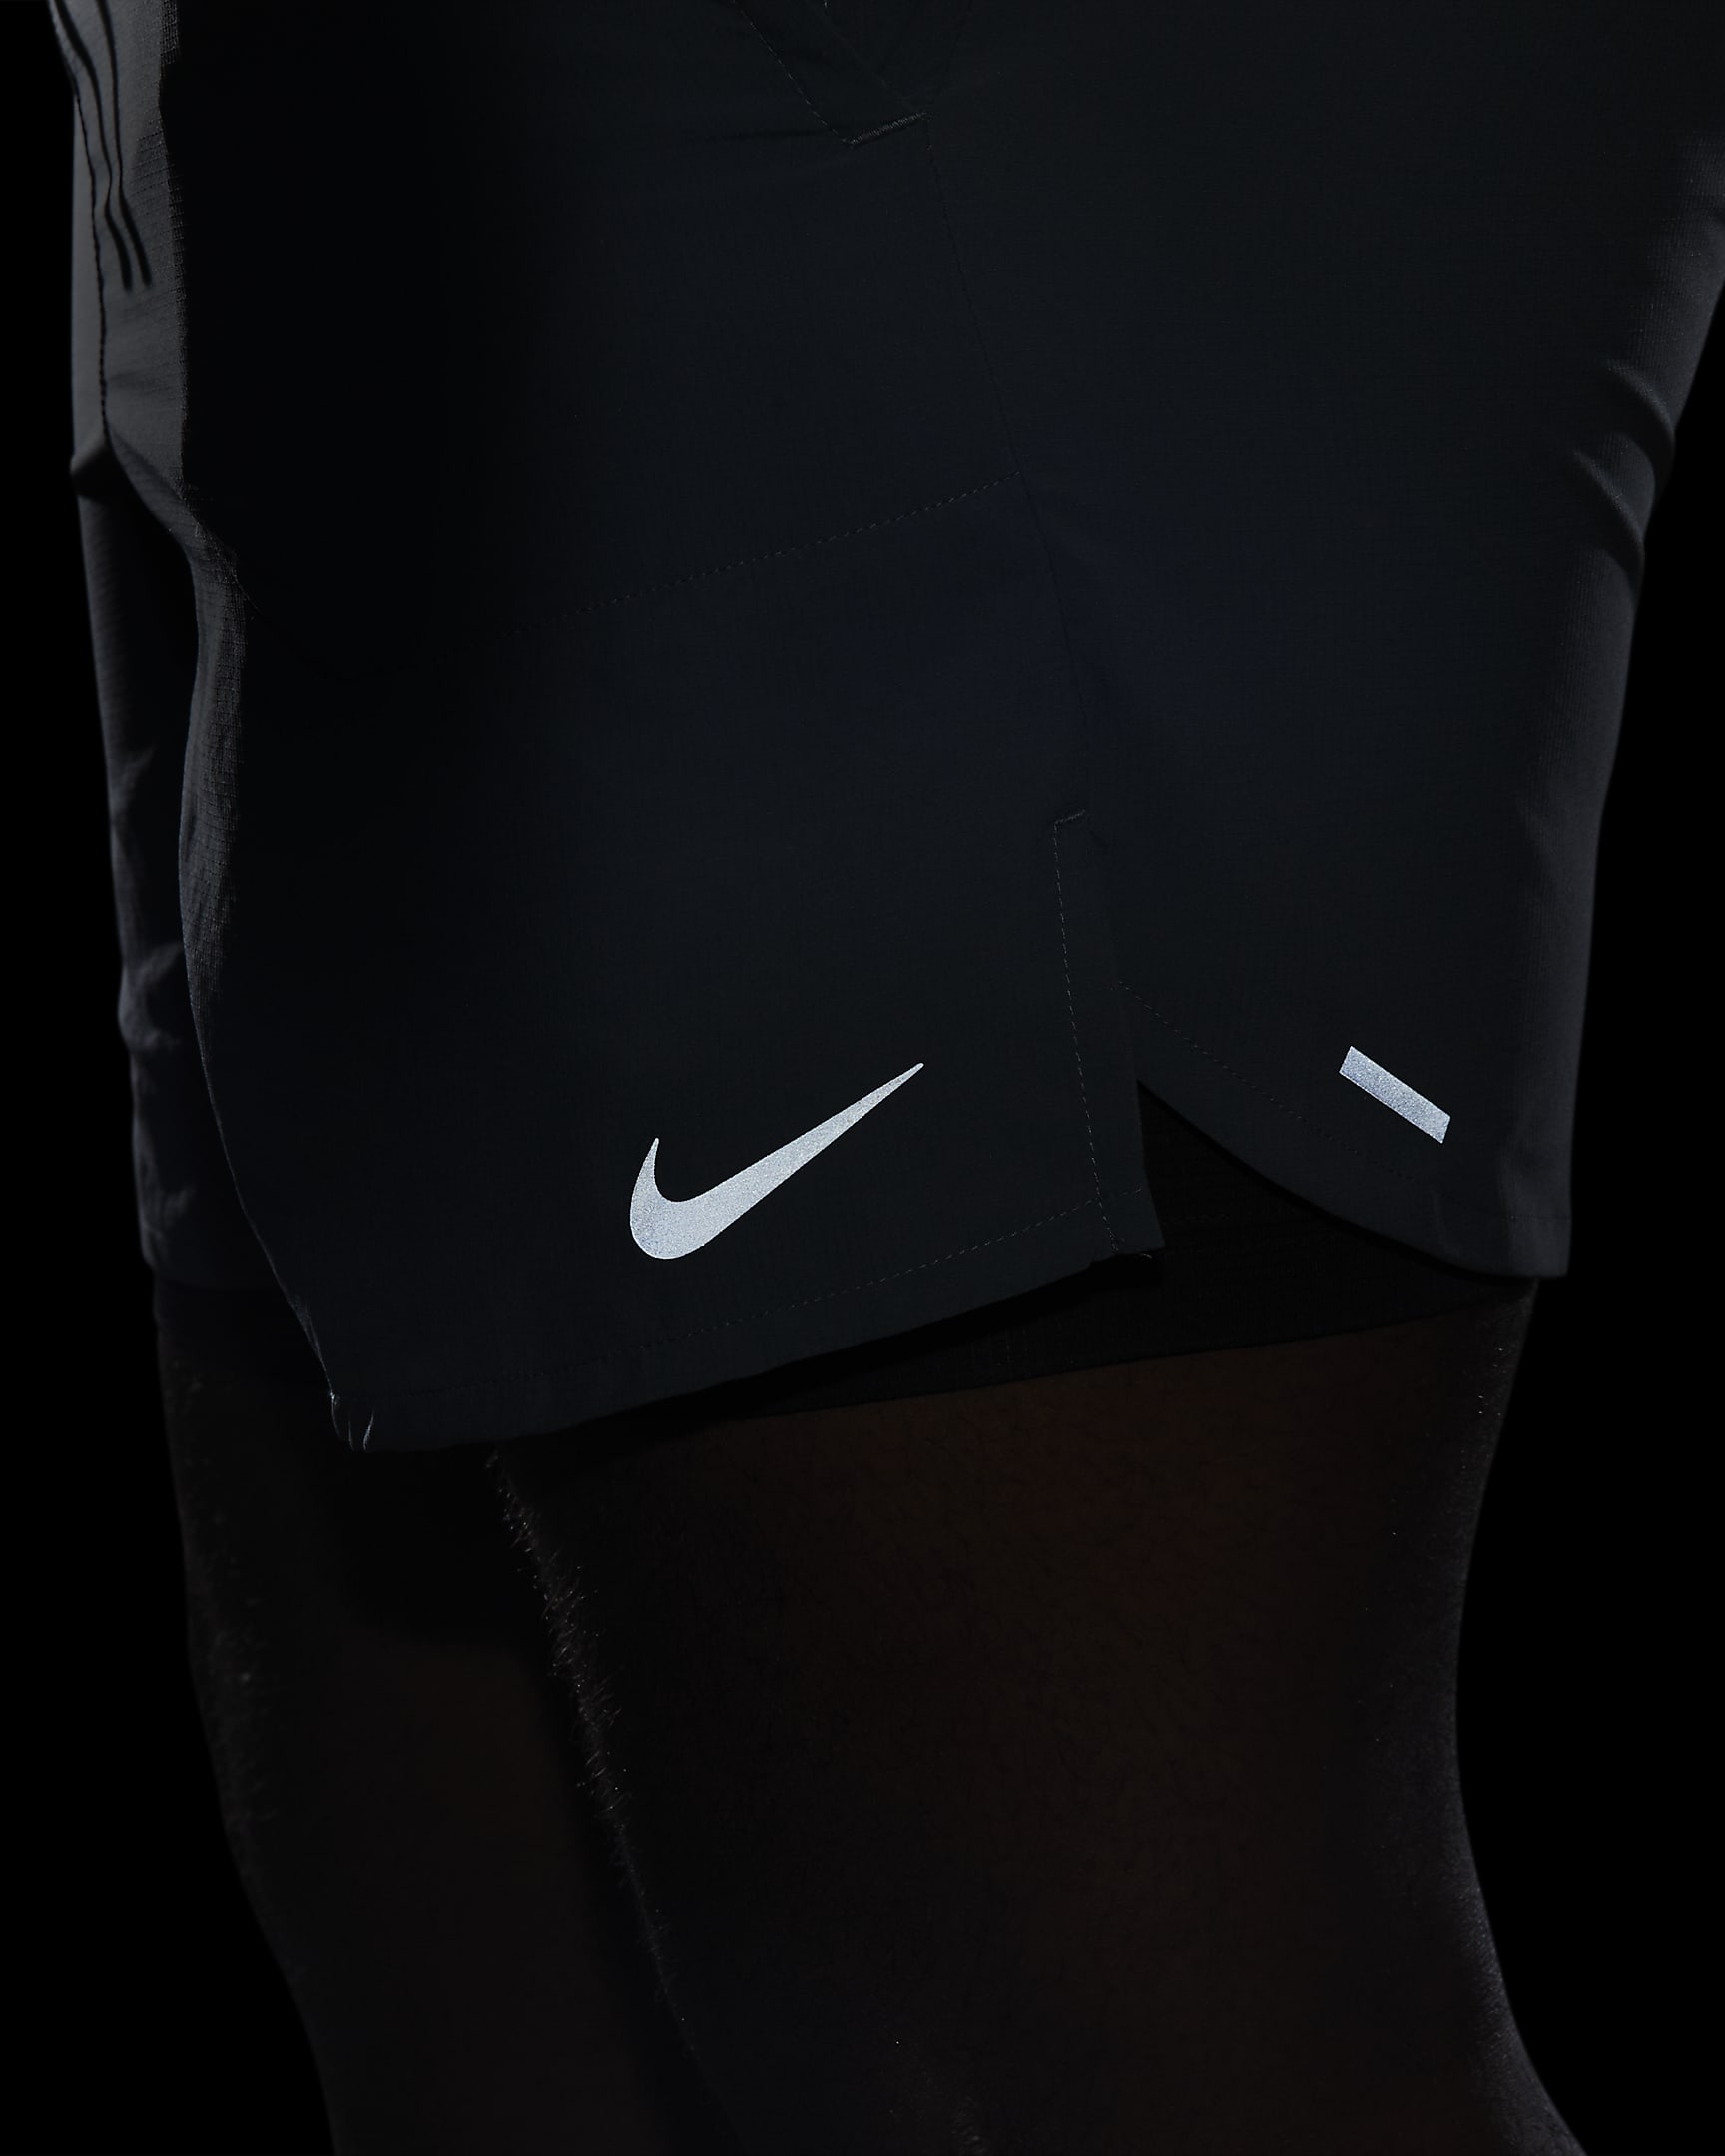 Nike Stride Men's Dri-FIT 18cm (approx.) 2-in-1 Running Shorts - Smoke Grey/Dark Smoke Grey/Black